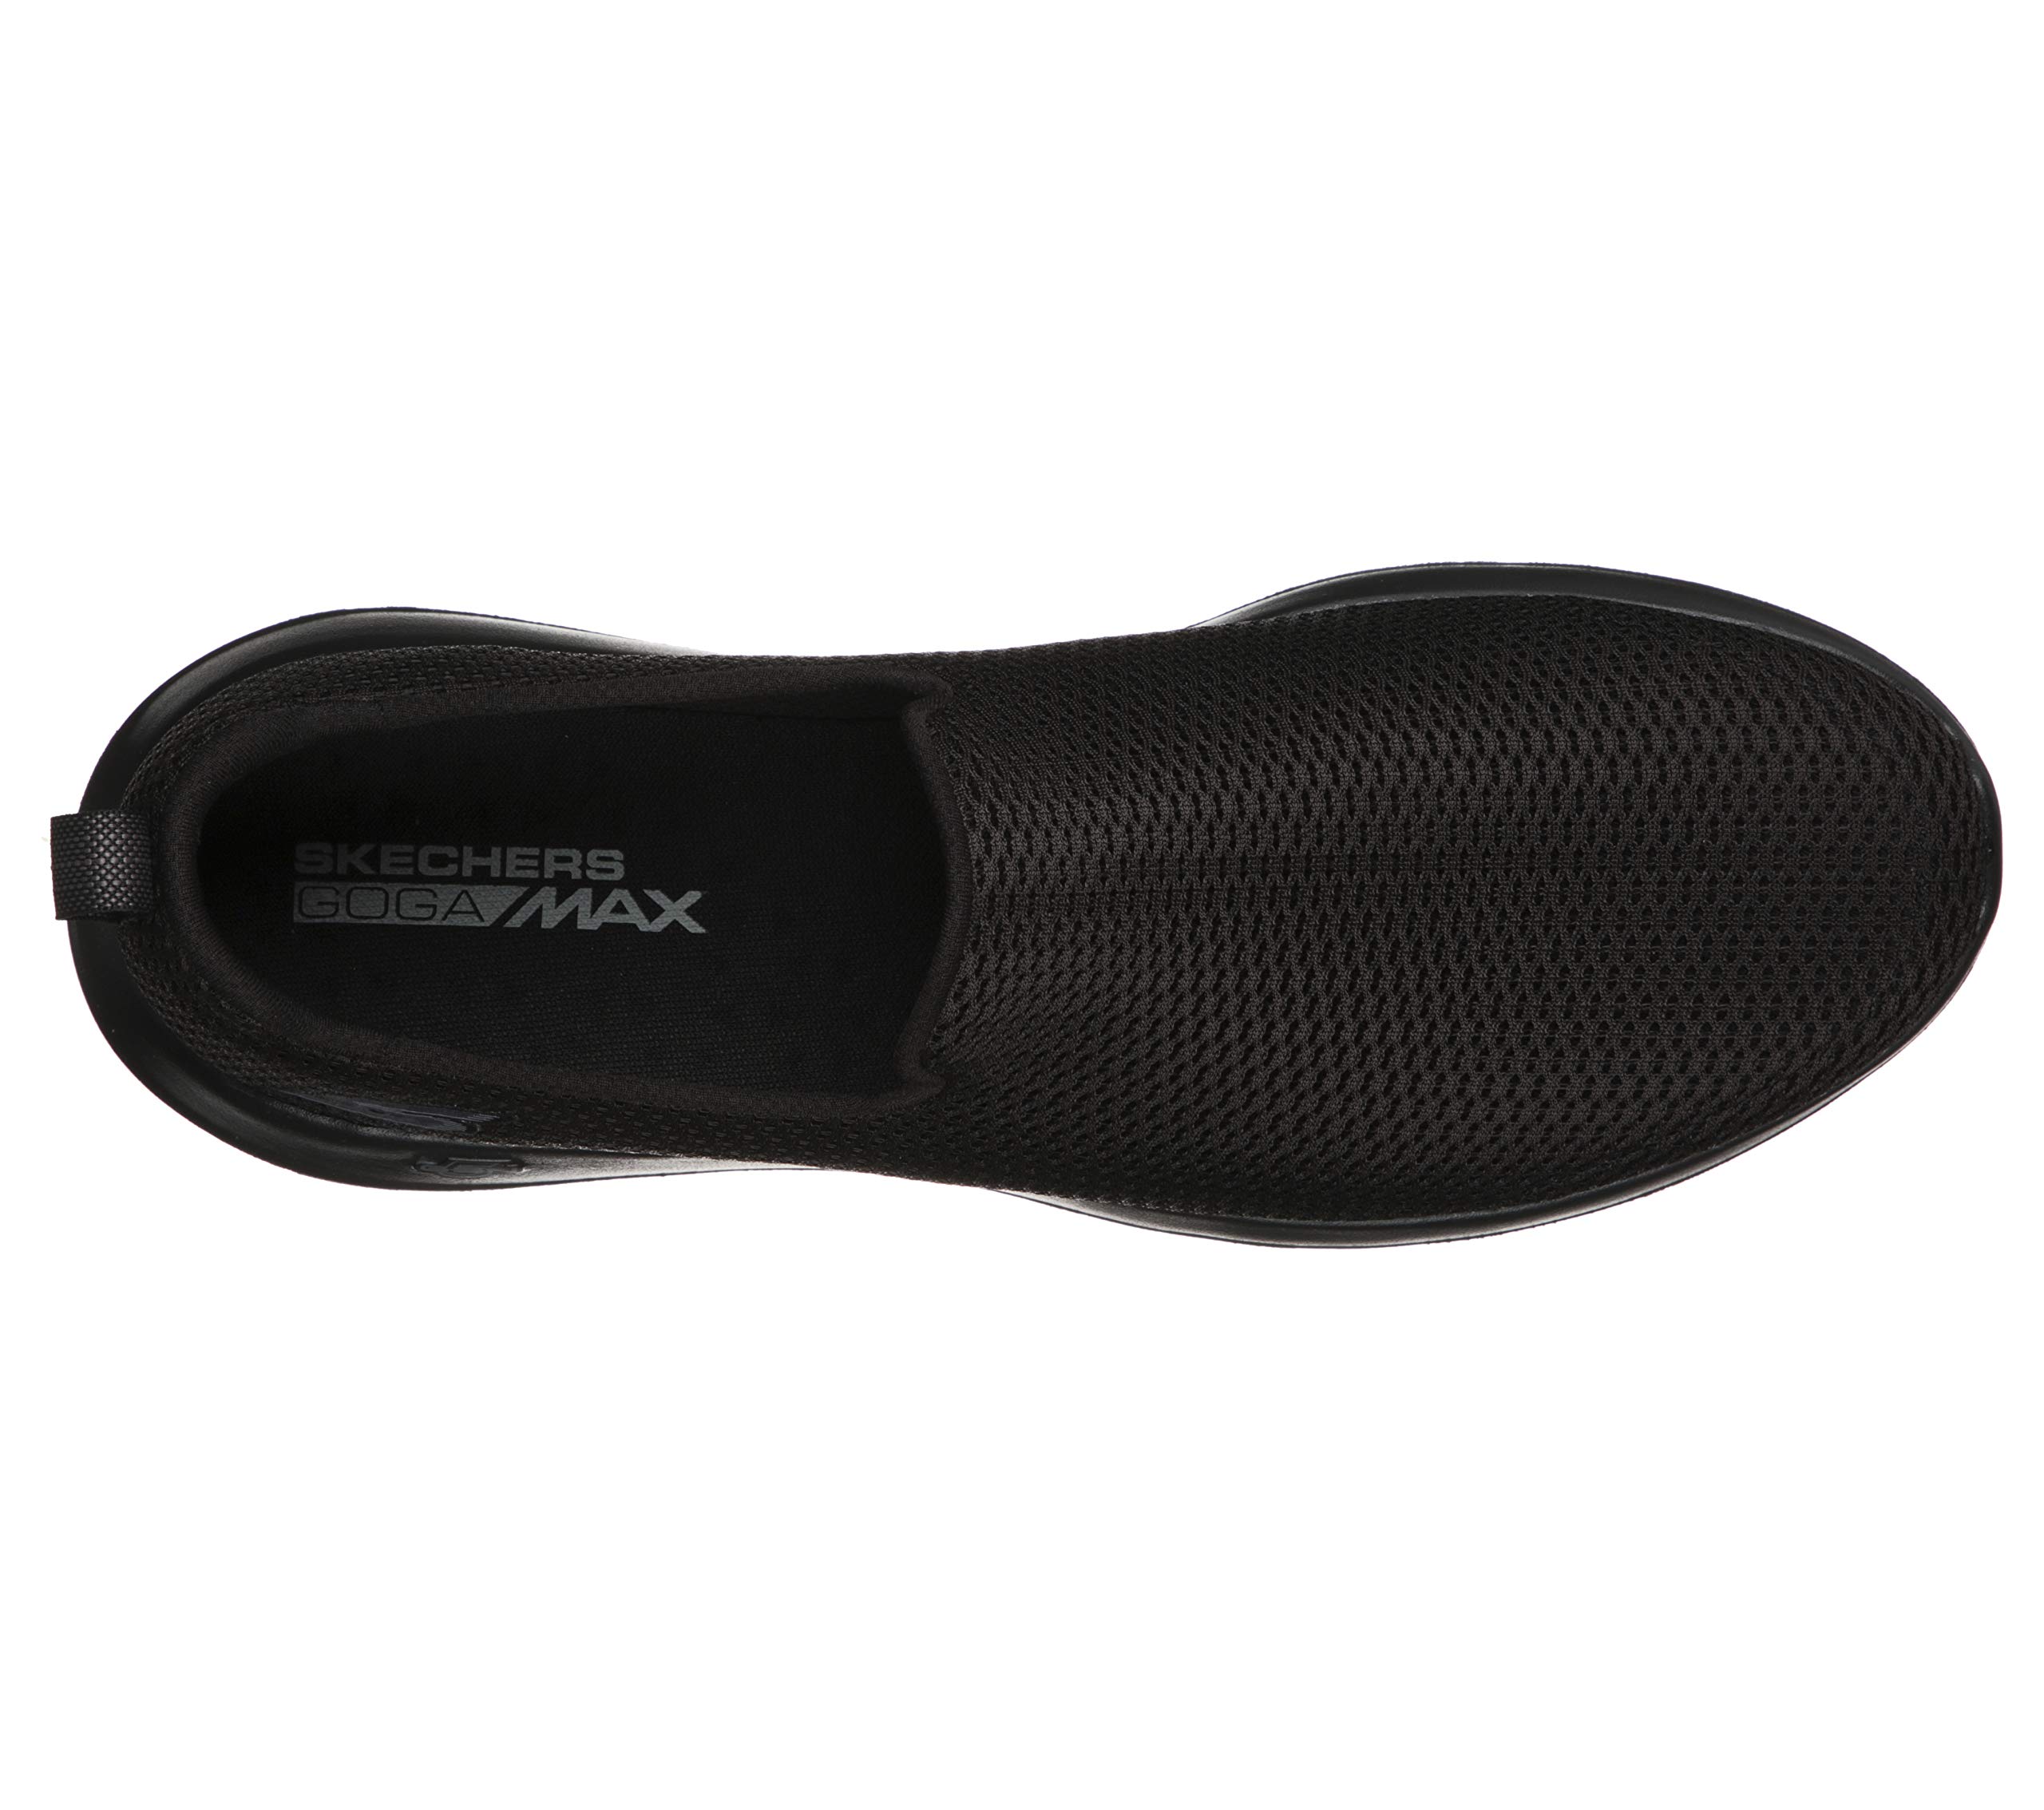 Skechers Men's Go Max-Athletic Air Mesh Slip on Walking Shoe Sneaker